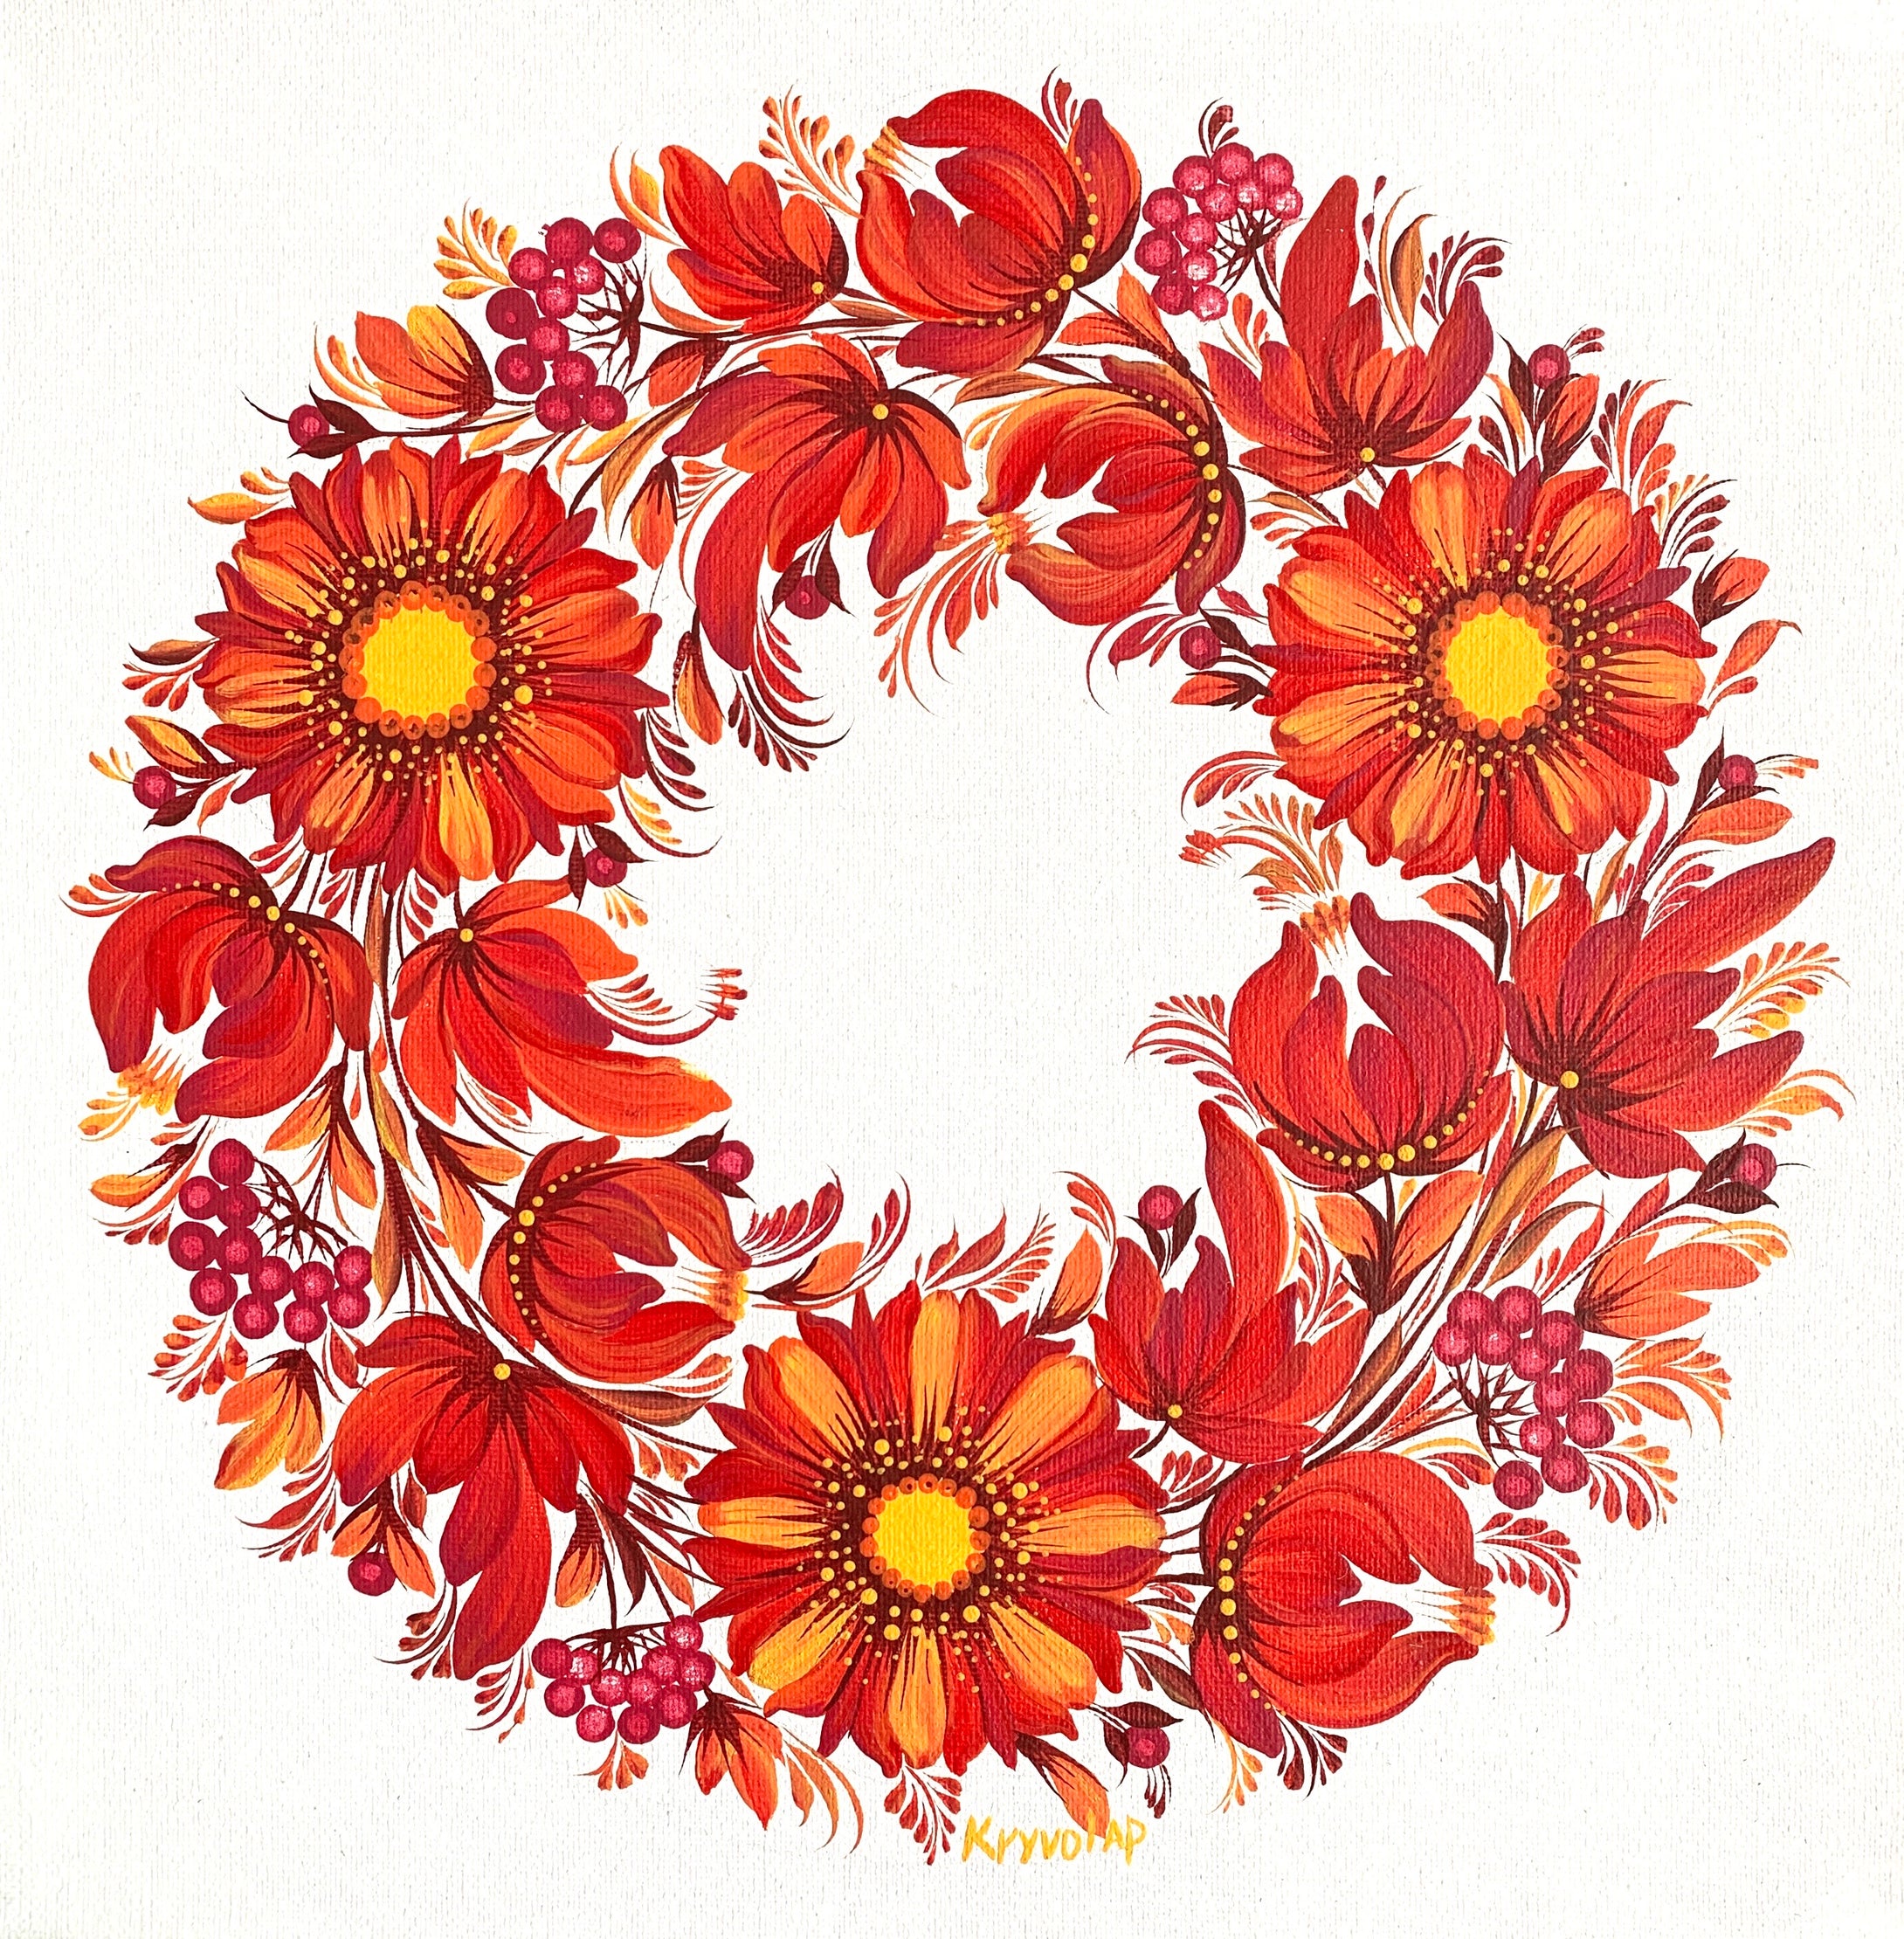 CIRCLET OF FLOWERS 2 - 12 in x 12 in (30.4 cm x 30.4 cm)